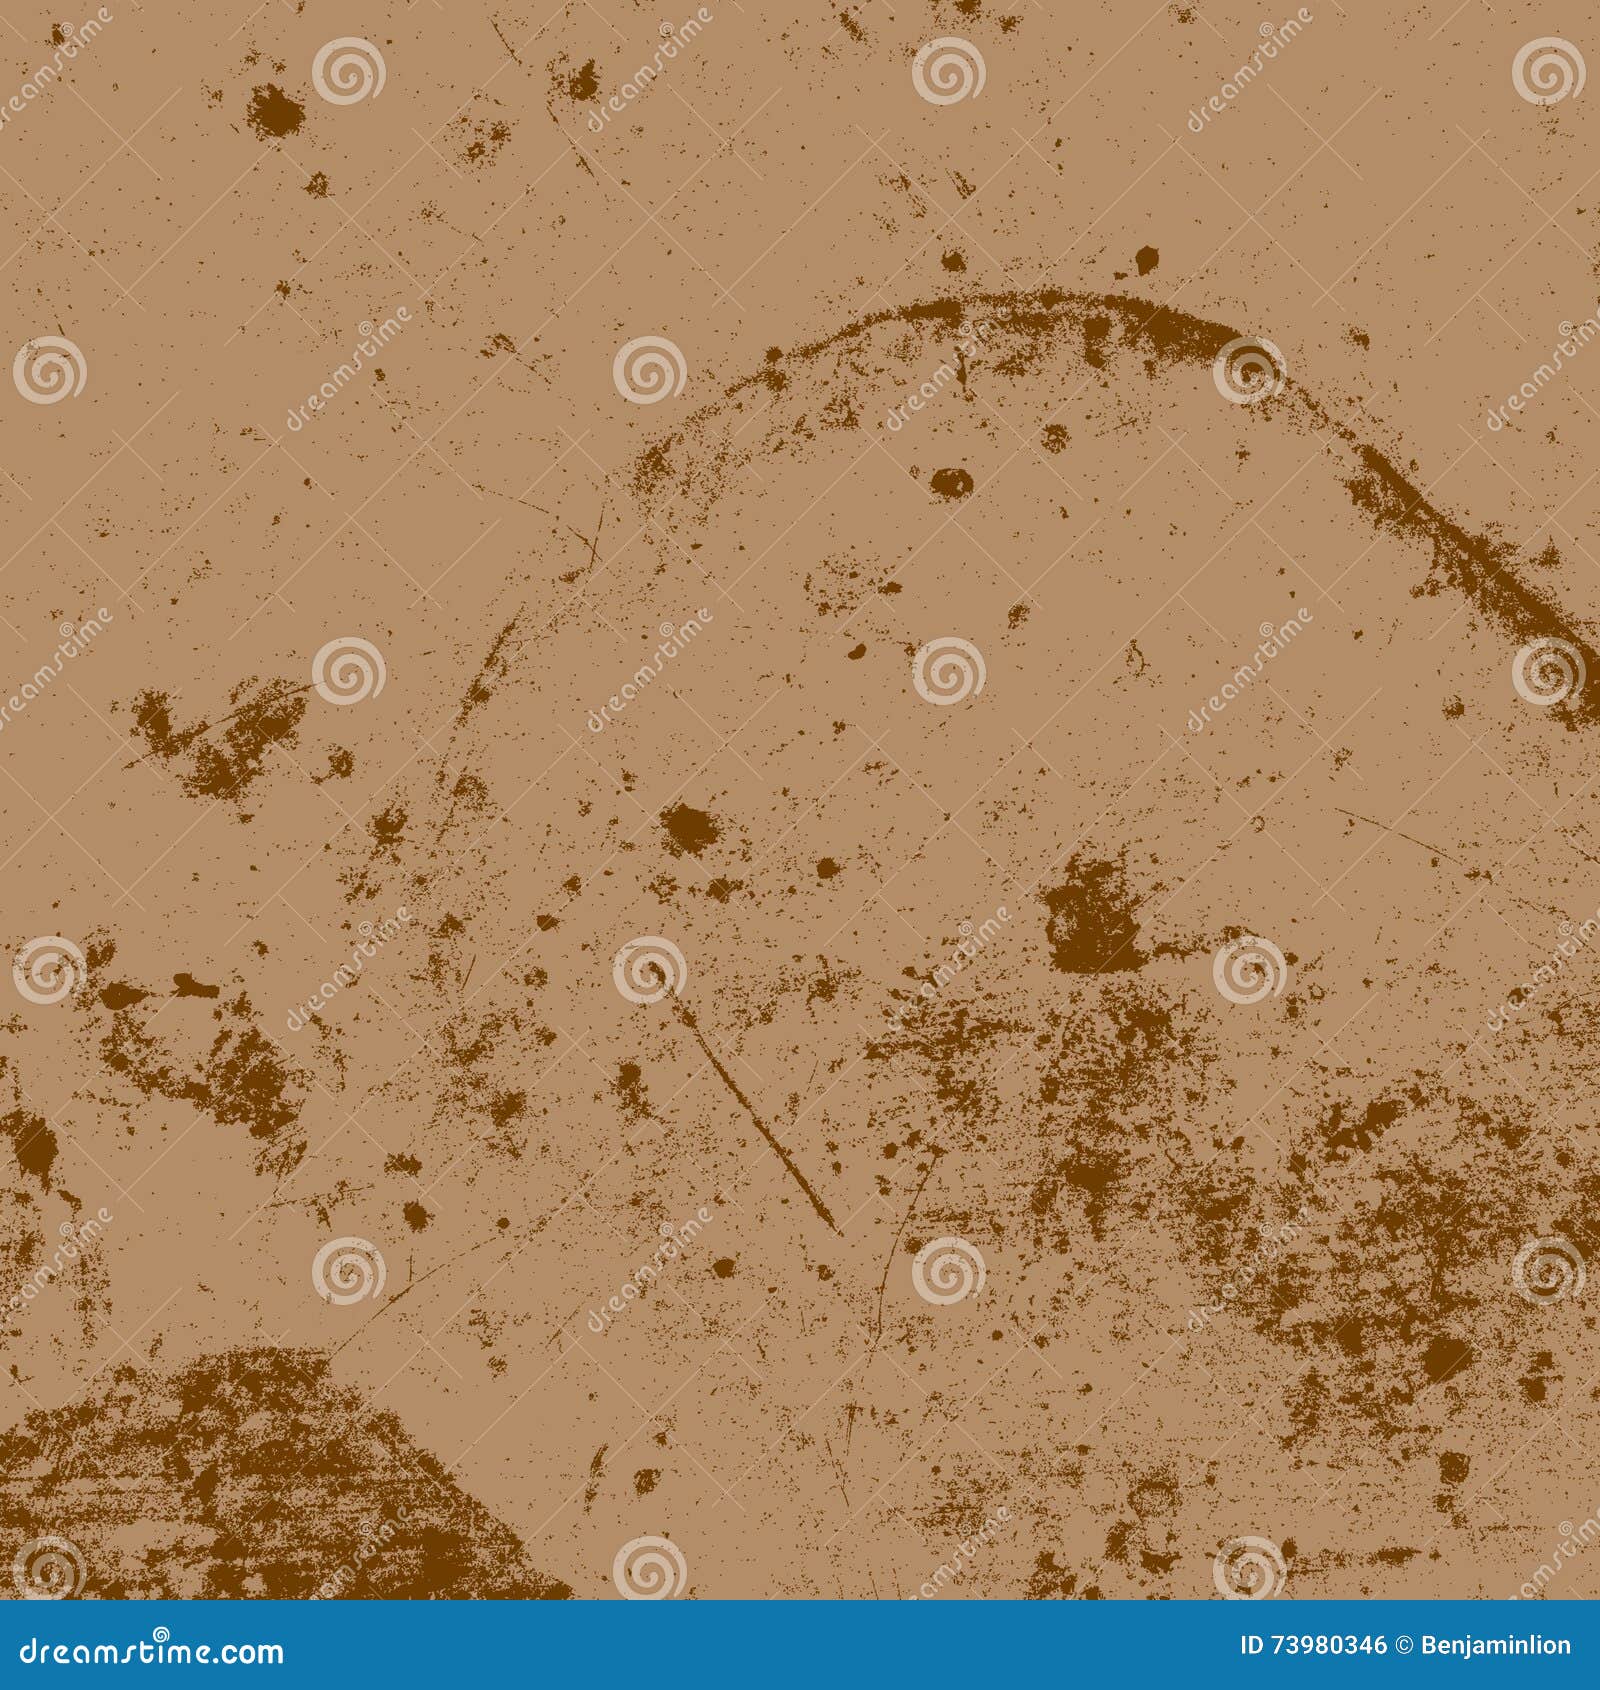 Grunge Brown Background stock vector. Illustration of noise - 73980346